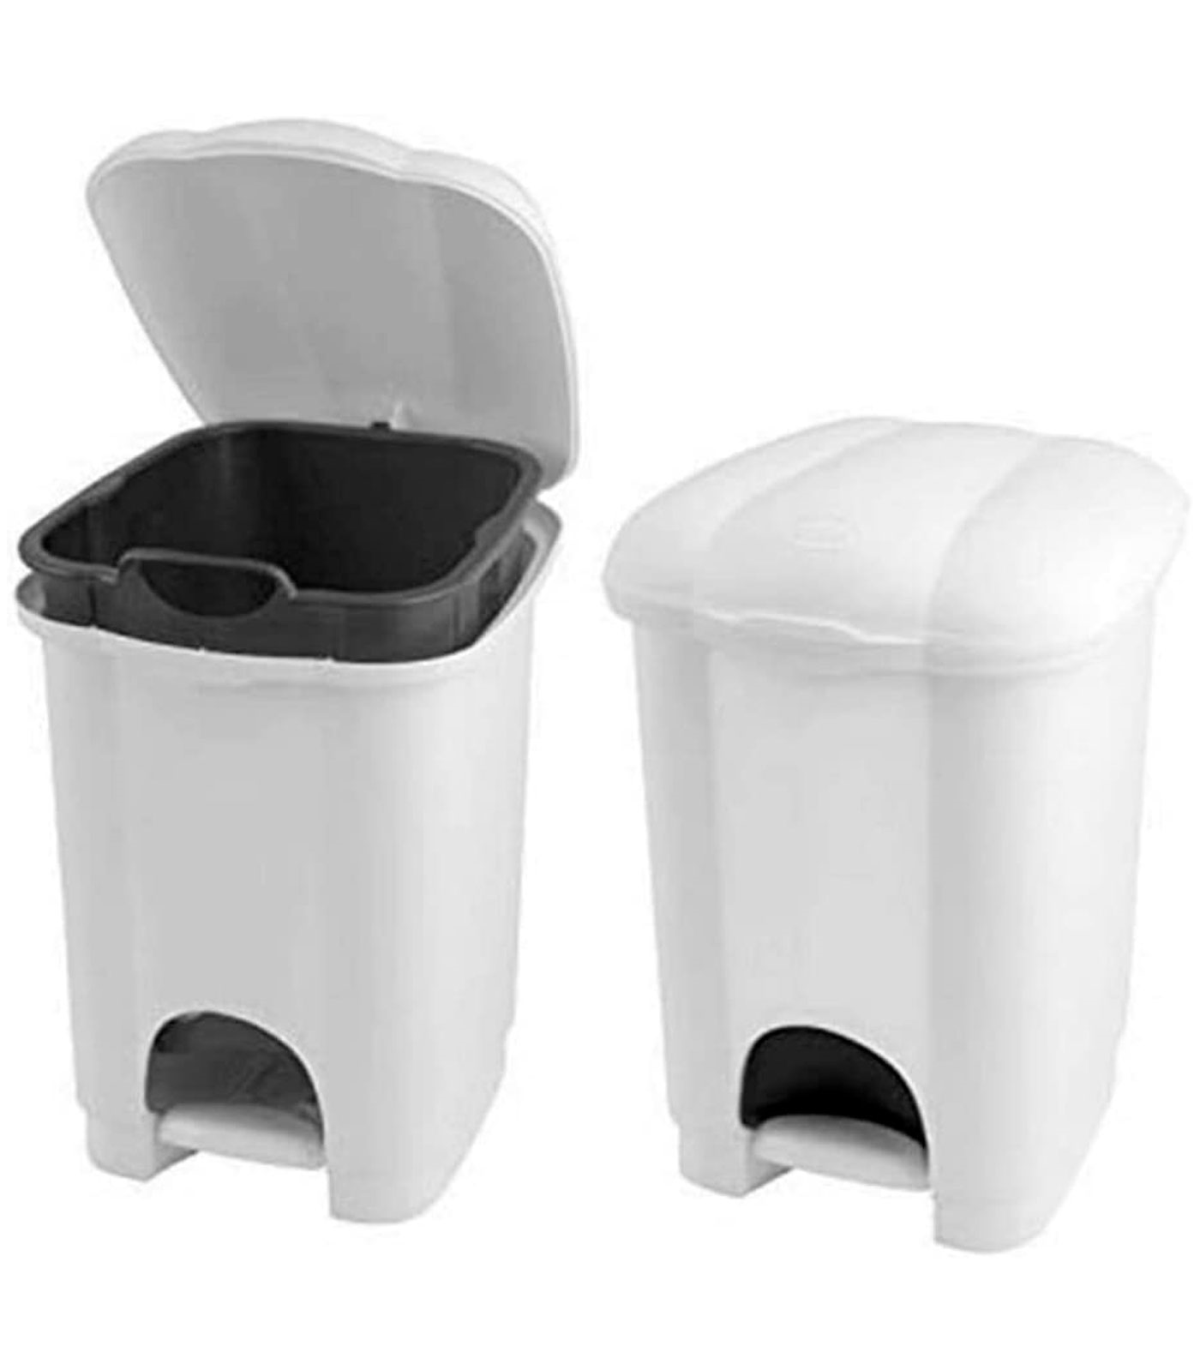 Tradineur - Cubo de basura de plástico con pedal y con 1 compartimento,  contenedor de residuos, papelera, cocina, fabricado en E